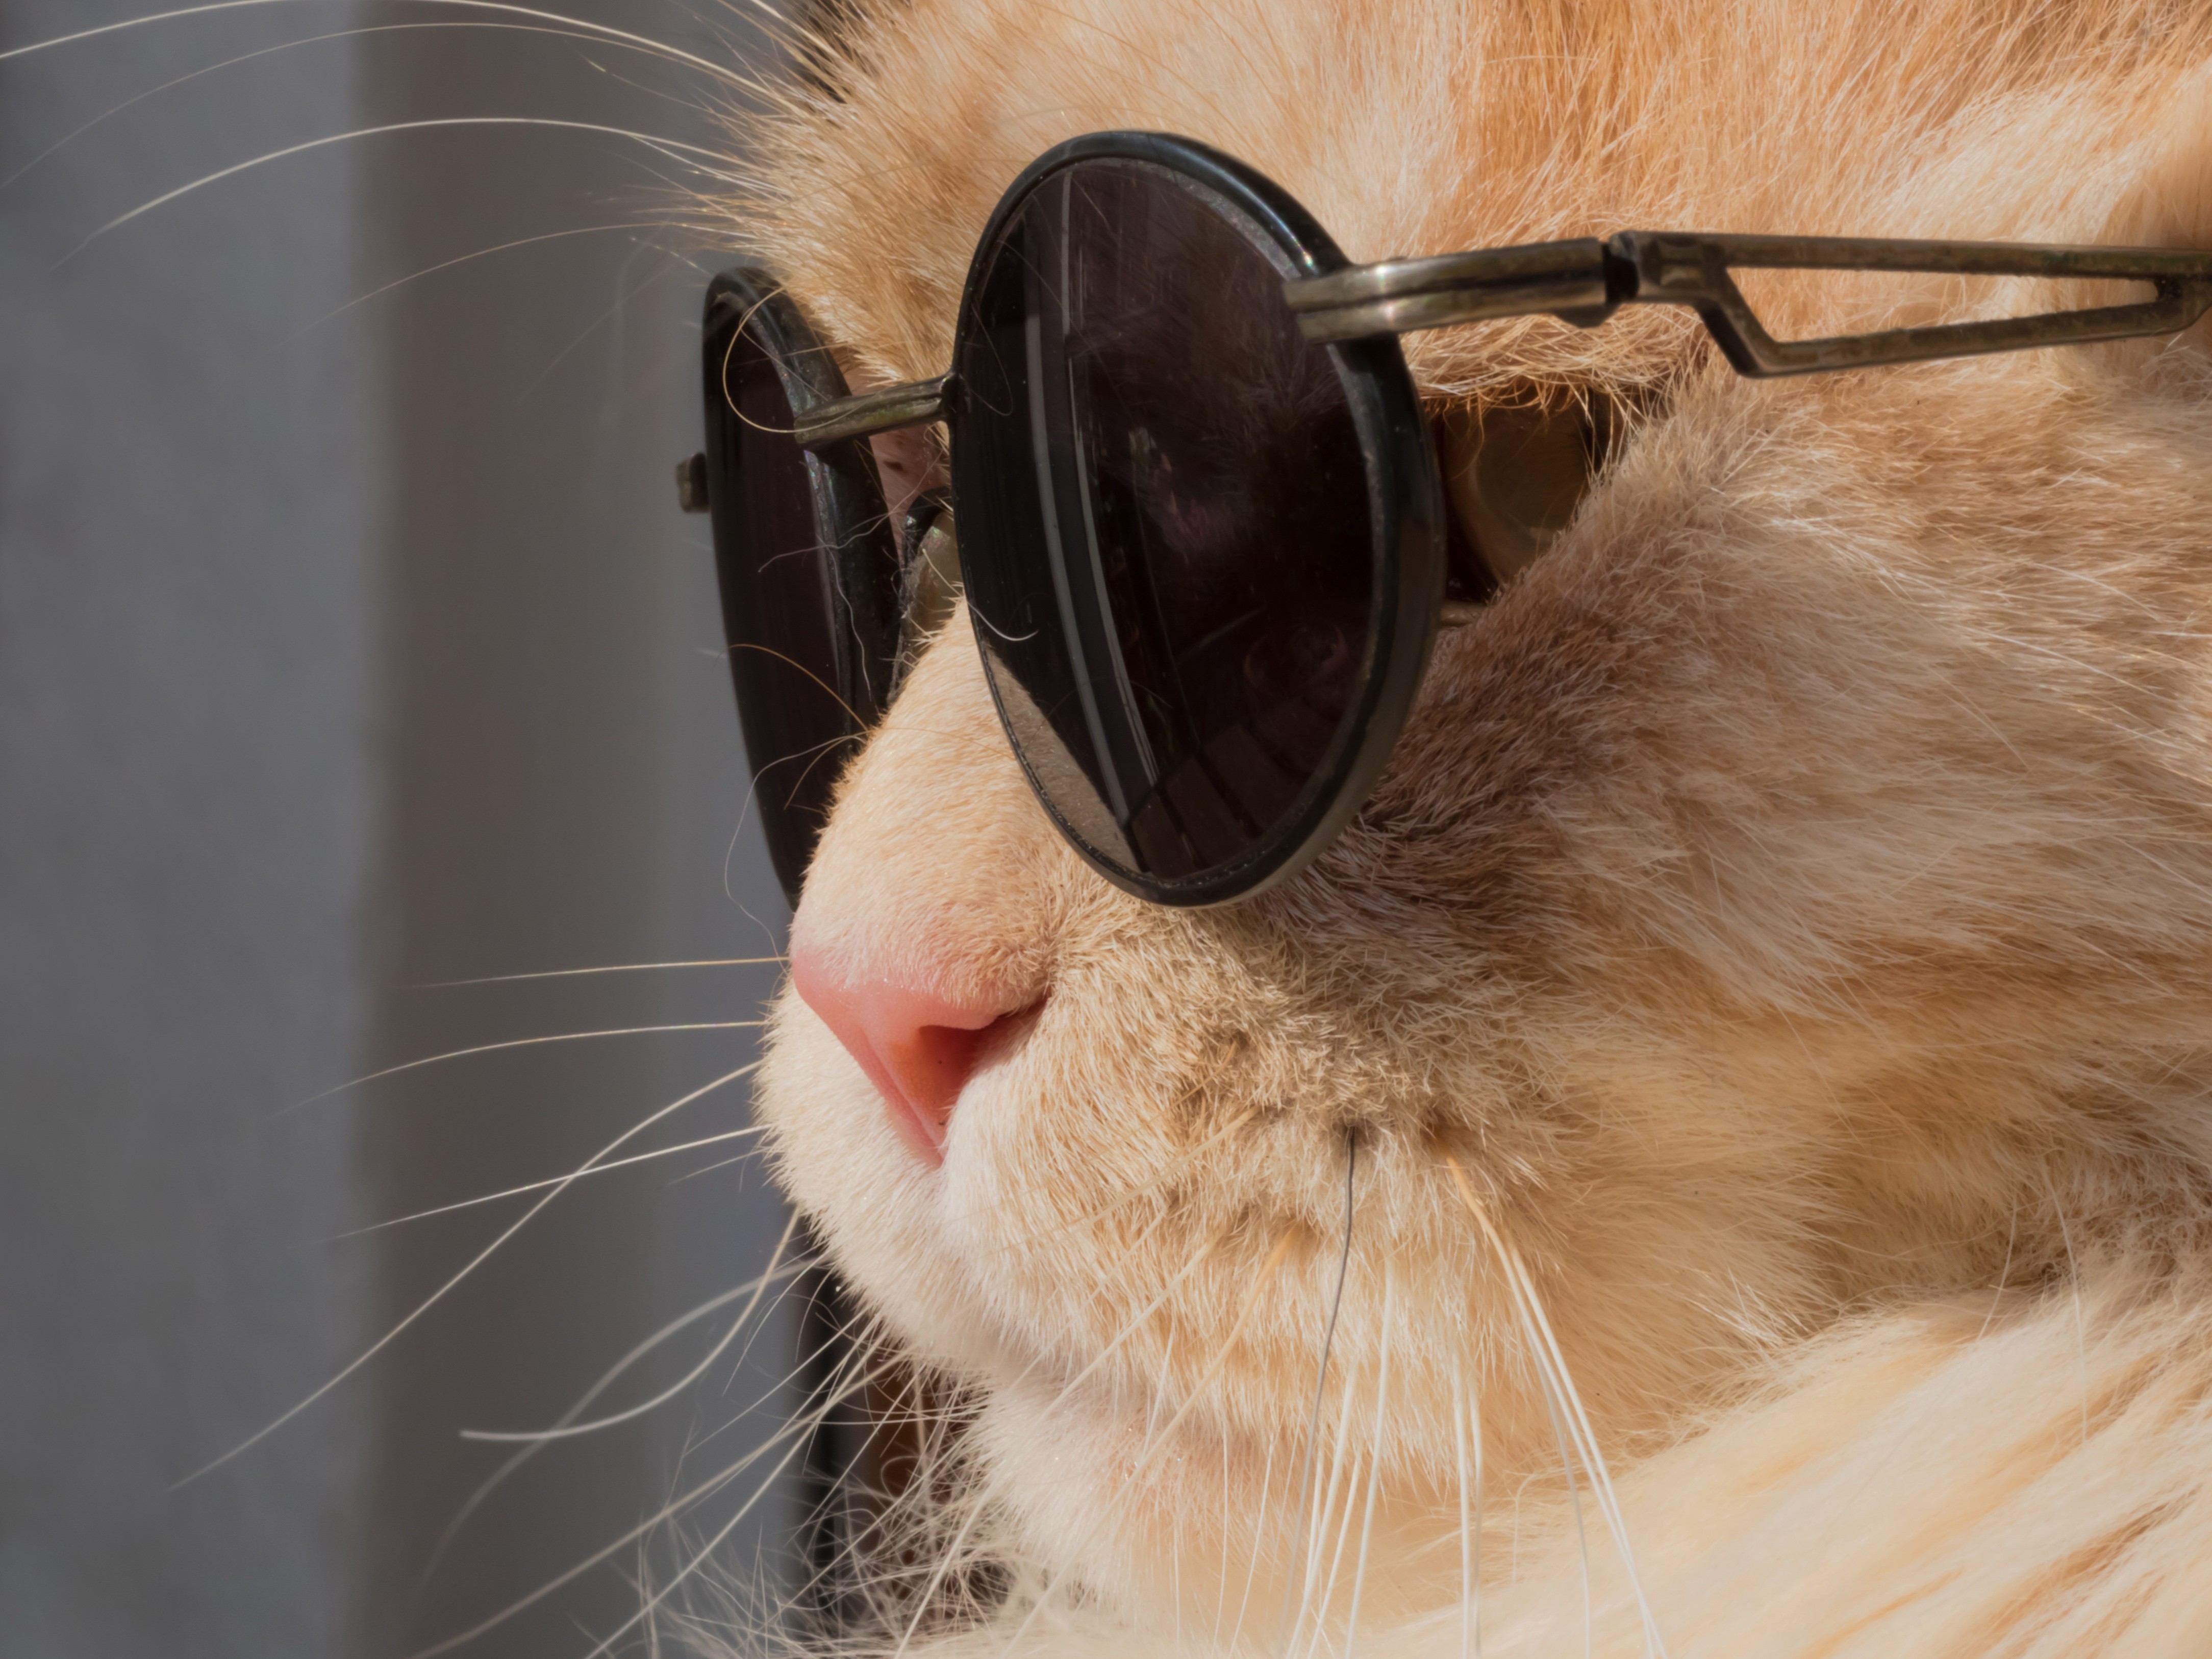 General 4336x3252 cats animals humor Leon: The Professional sunglasses closeup